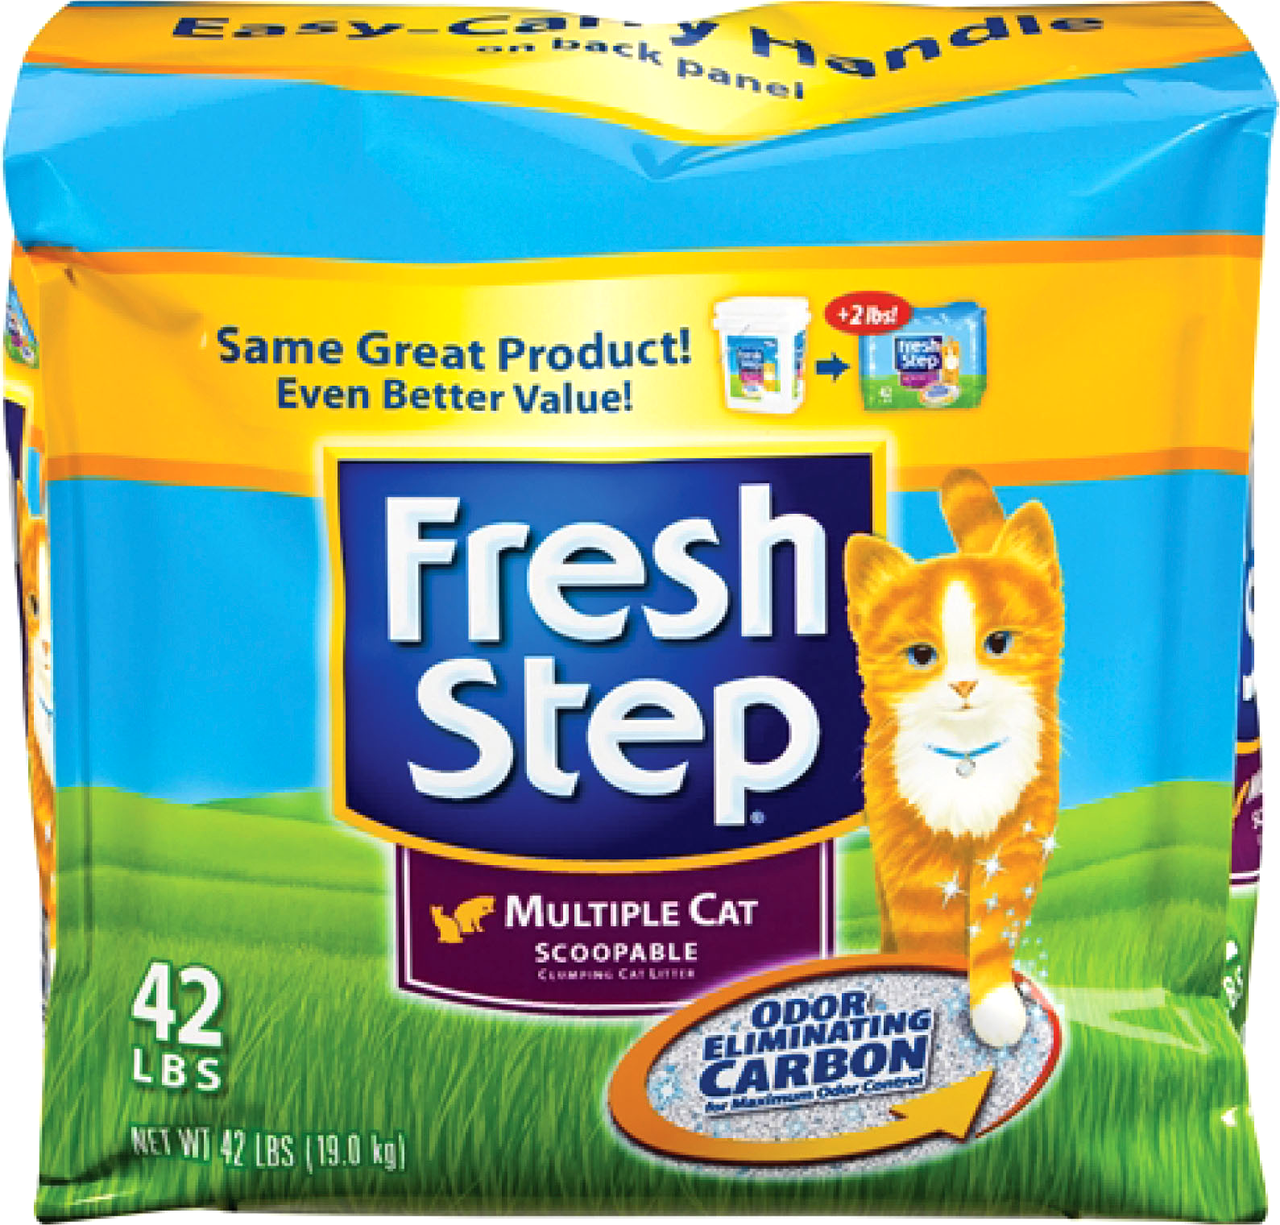 Clorox Fresh Step Multi-Cat Scoopable Clumping Cat Litter 42lb {L-1}261006 044600320496